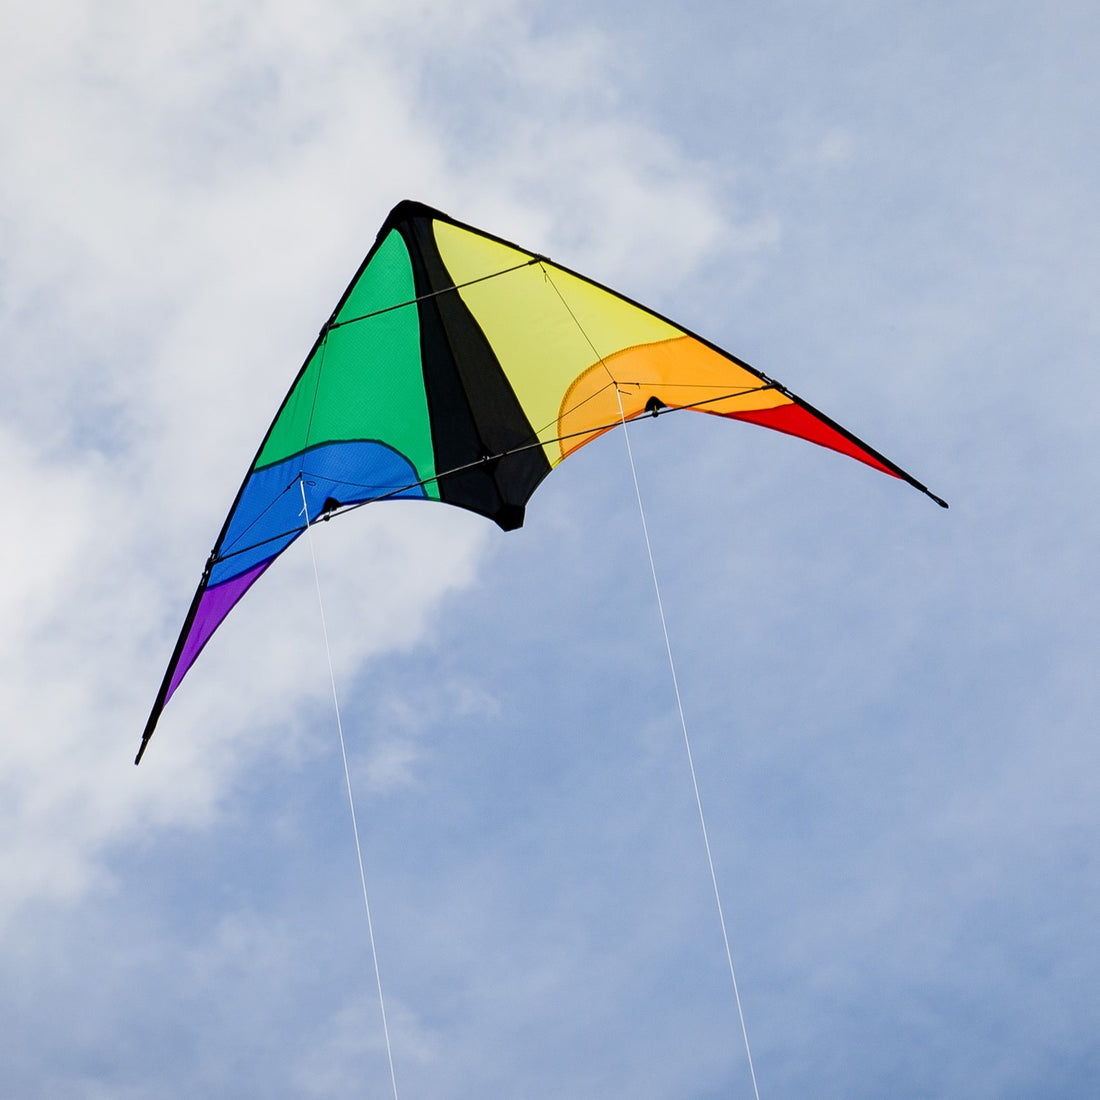 48" Colorwave Sport Kite